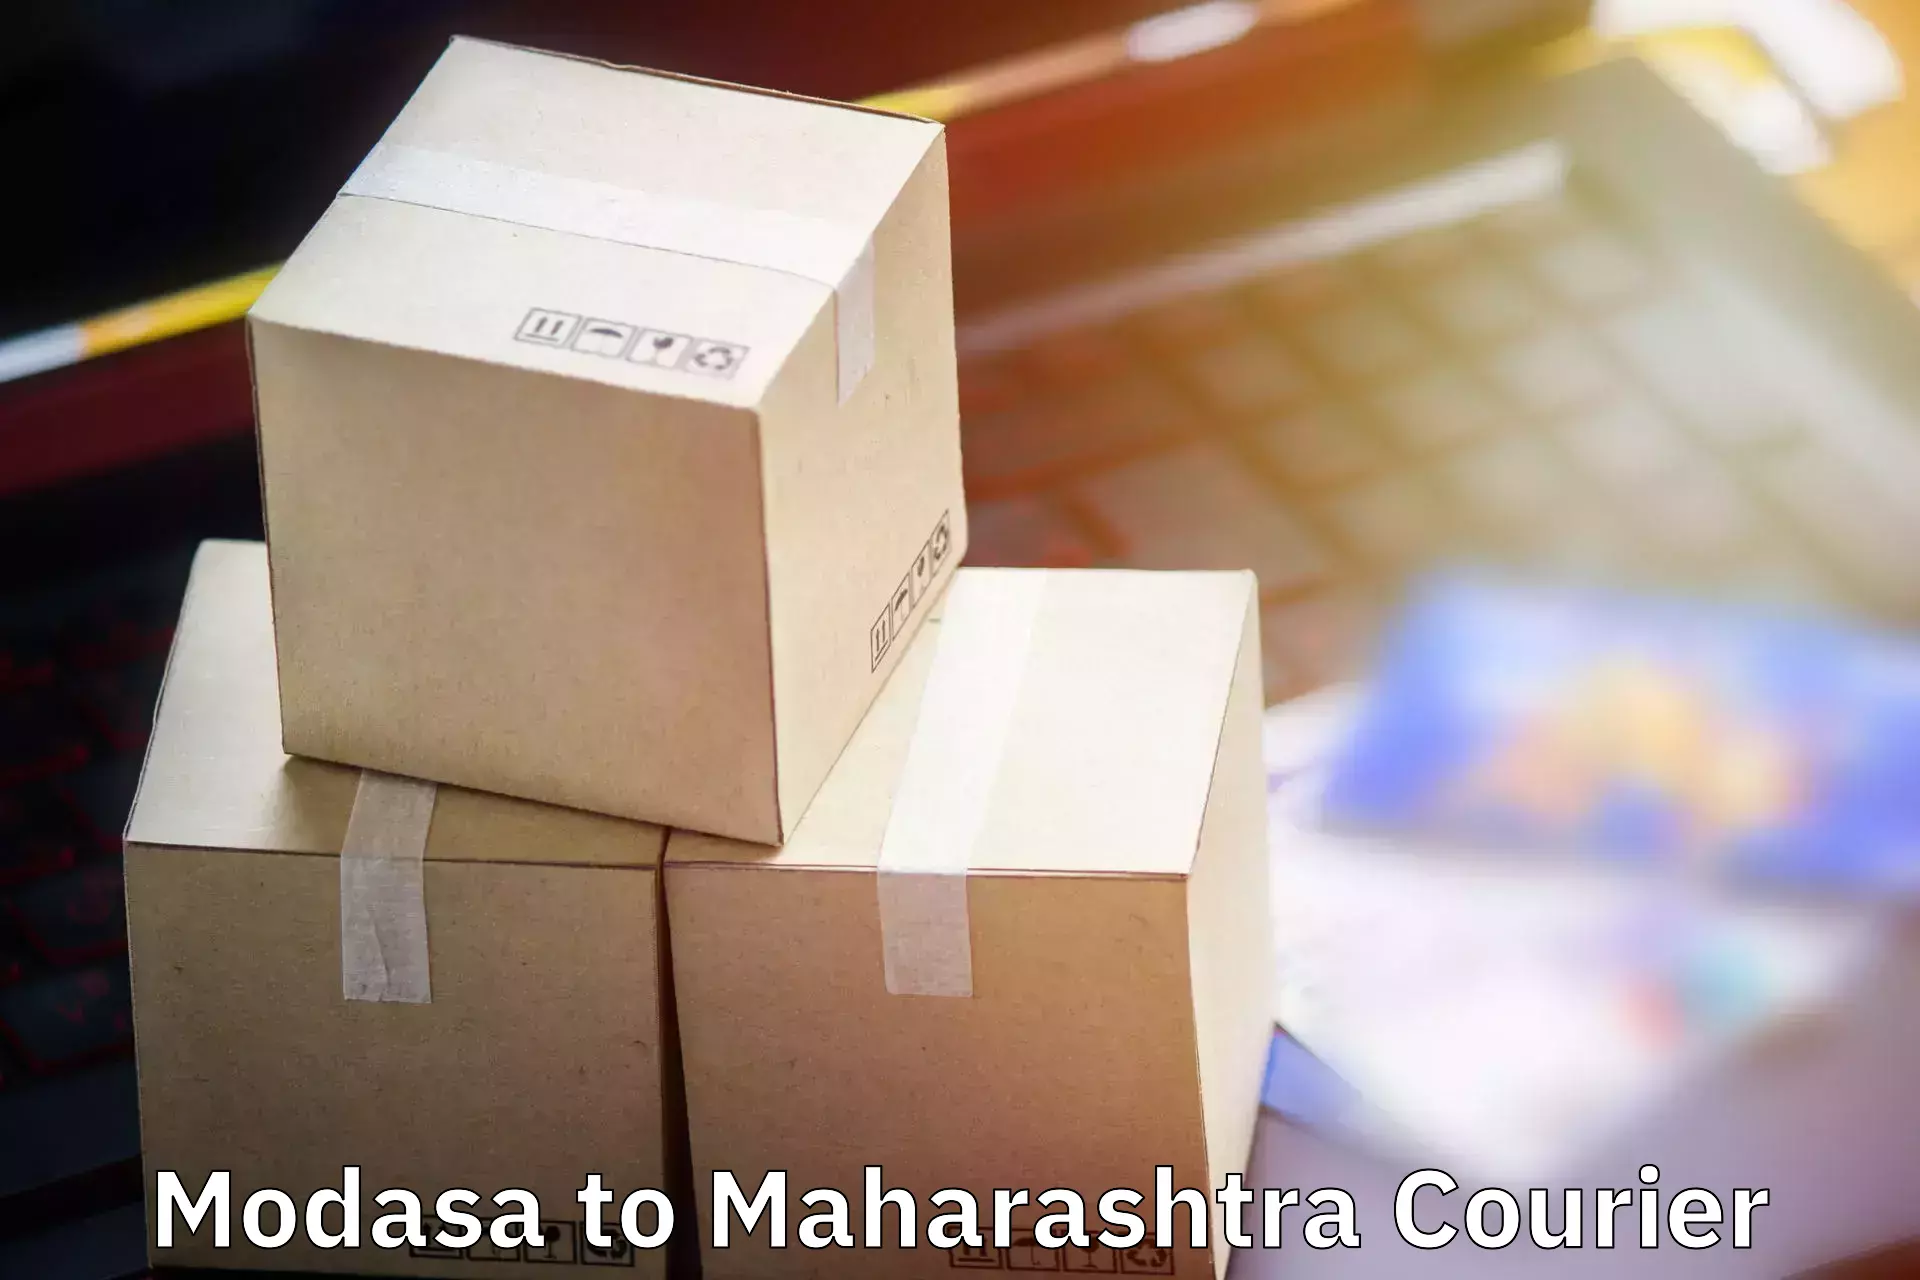 Personal effects shipping Modasa to Bhiwandi